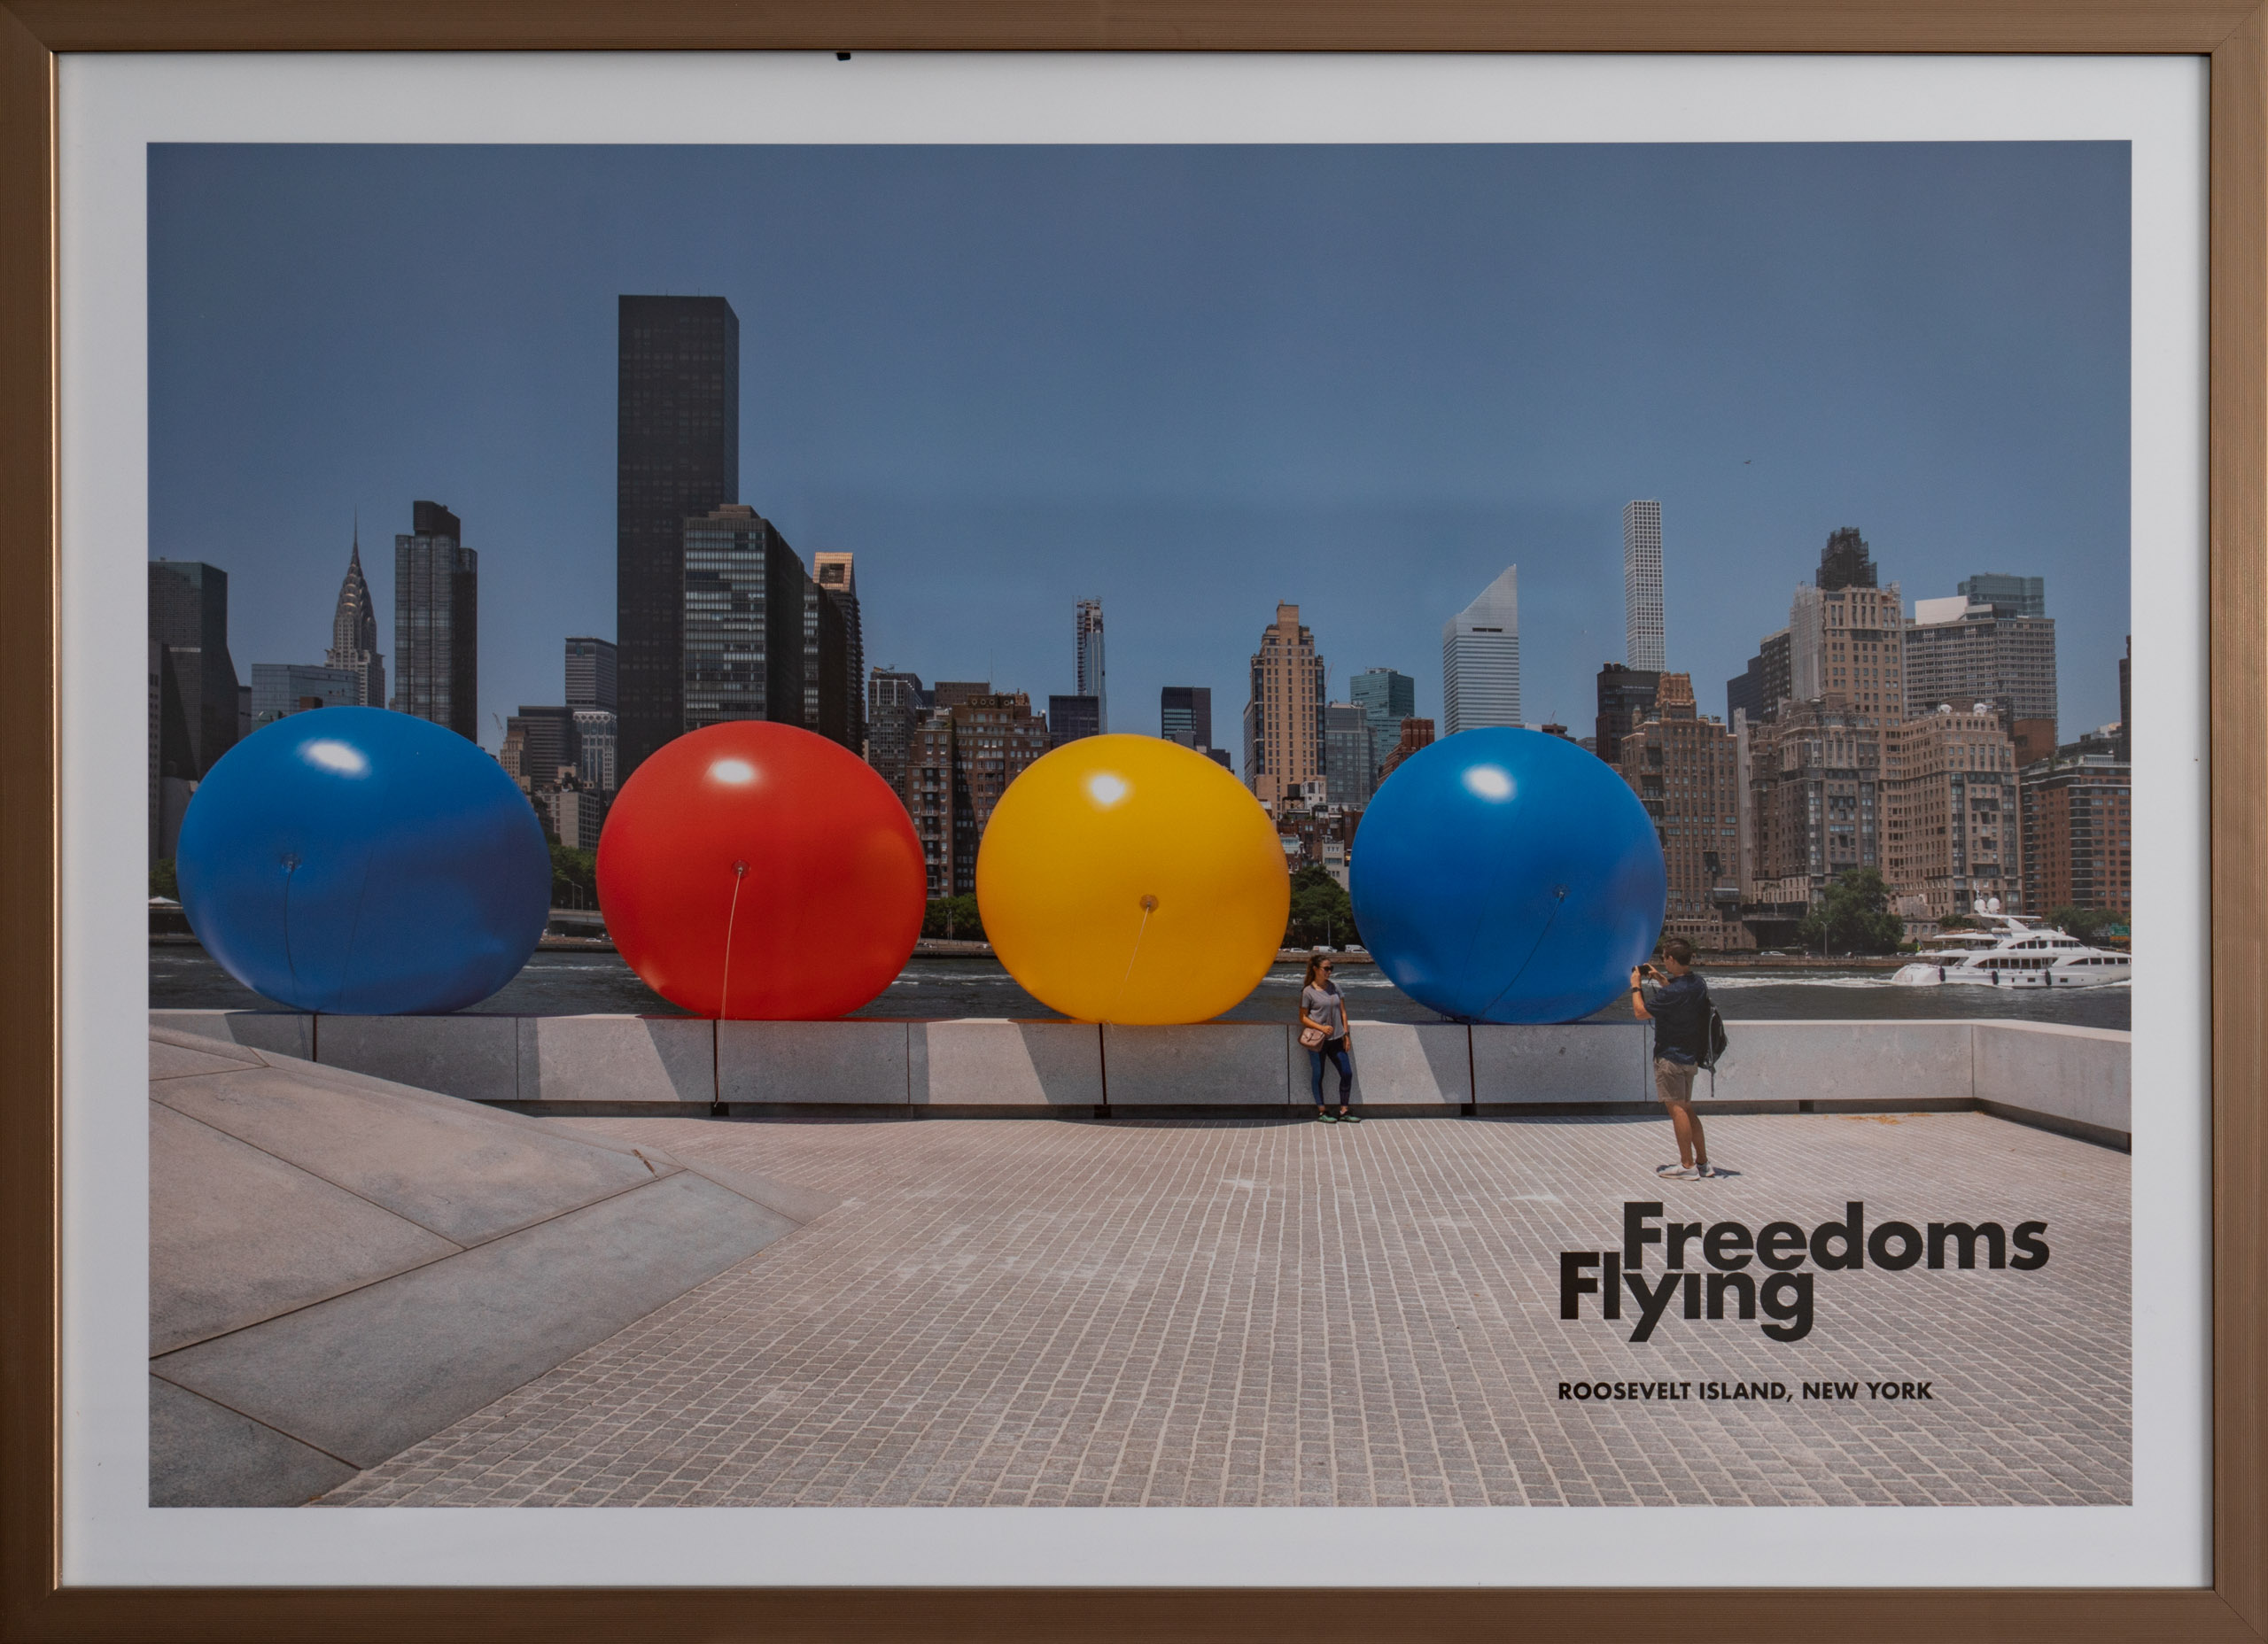 FlyingFreedoms New York 2021